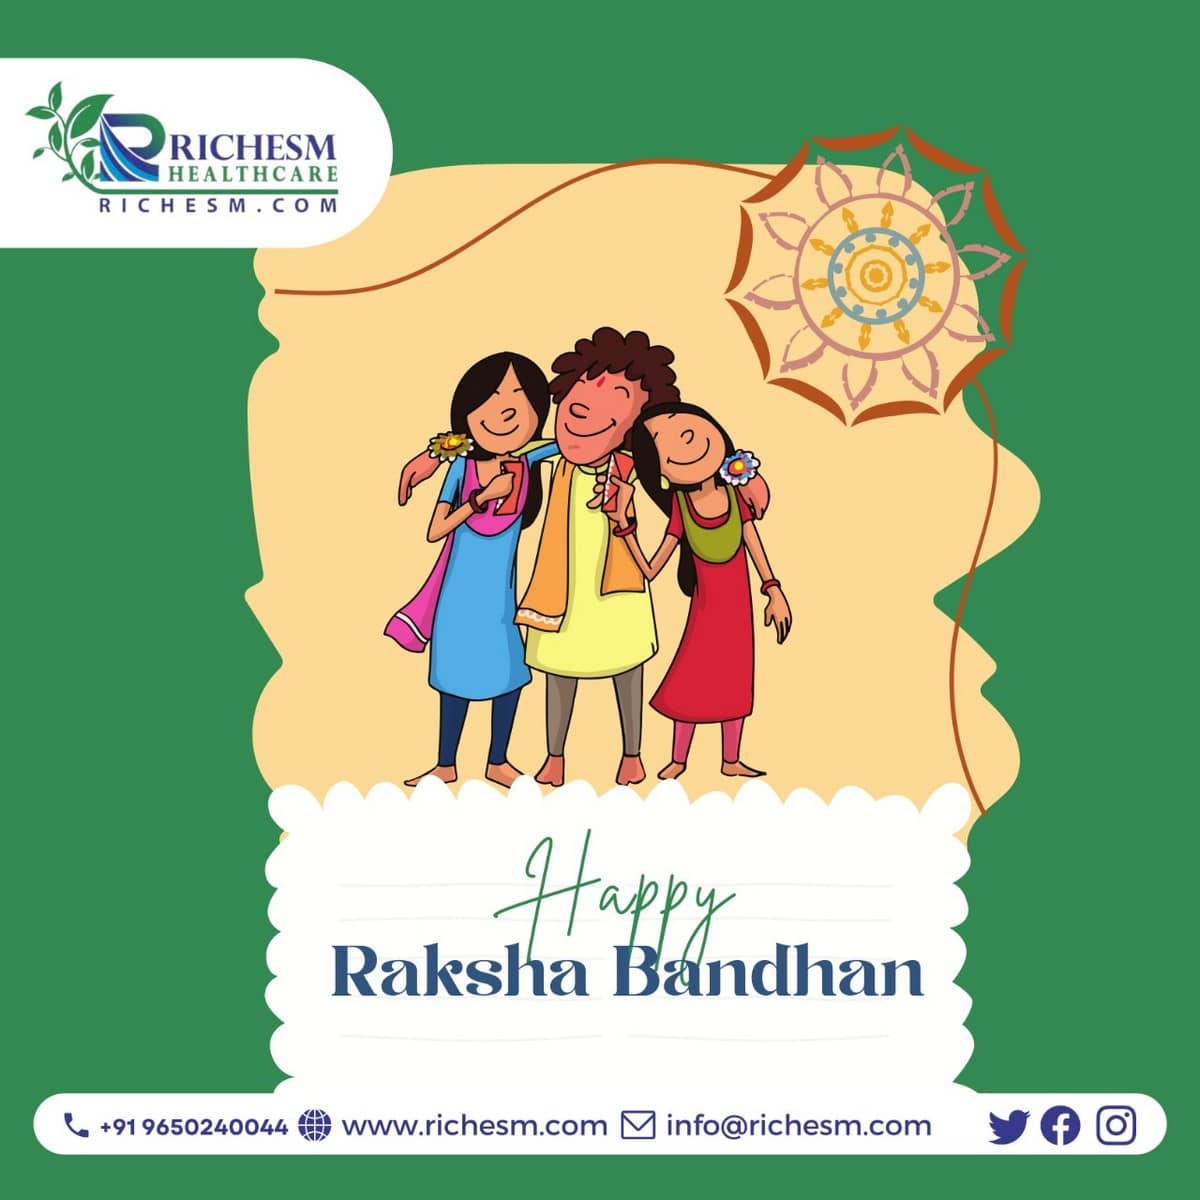 Richesm Wishes You All A Very Happy Raksha Bandhan